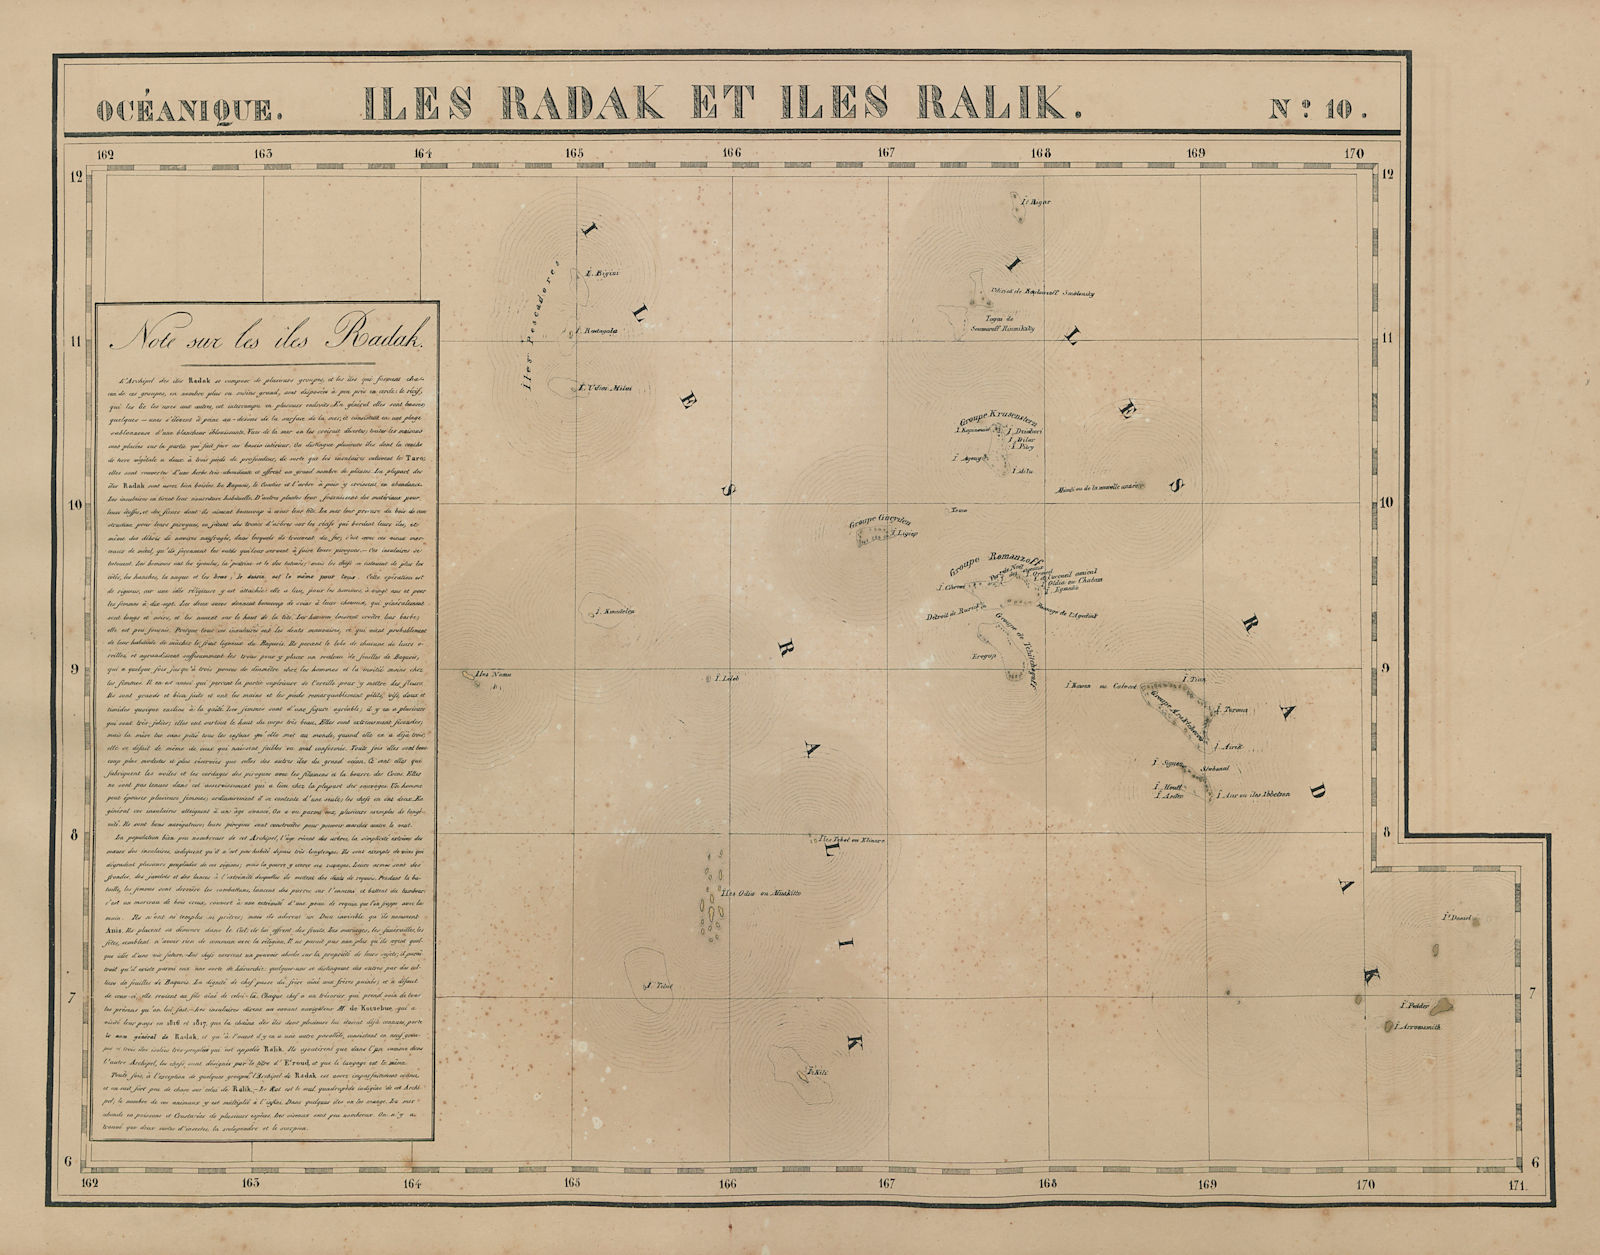 Océanique. Iles Radak et Iles Ralik #10. Marshall Islands. VANDERMAELEN 1827 map